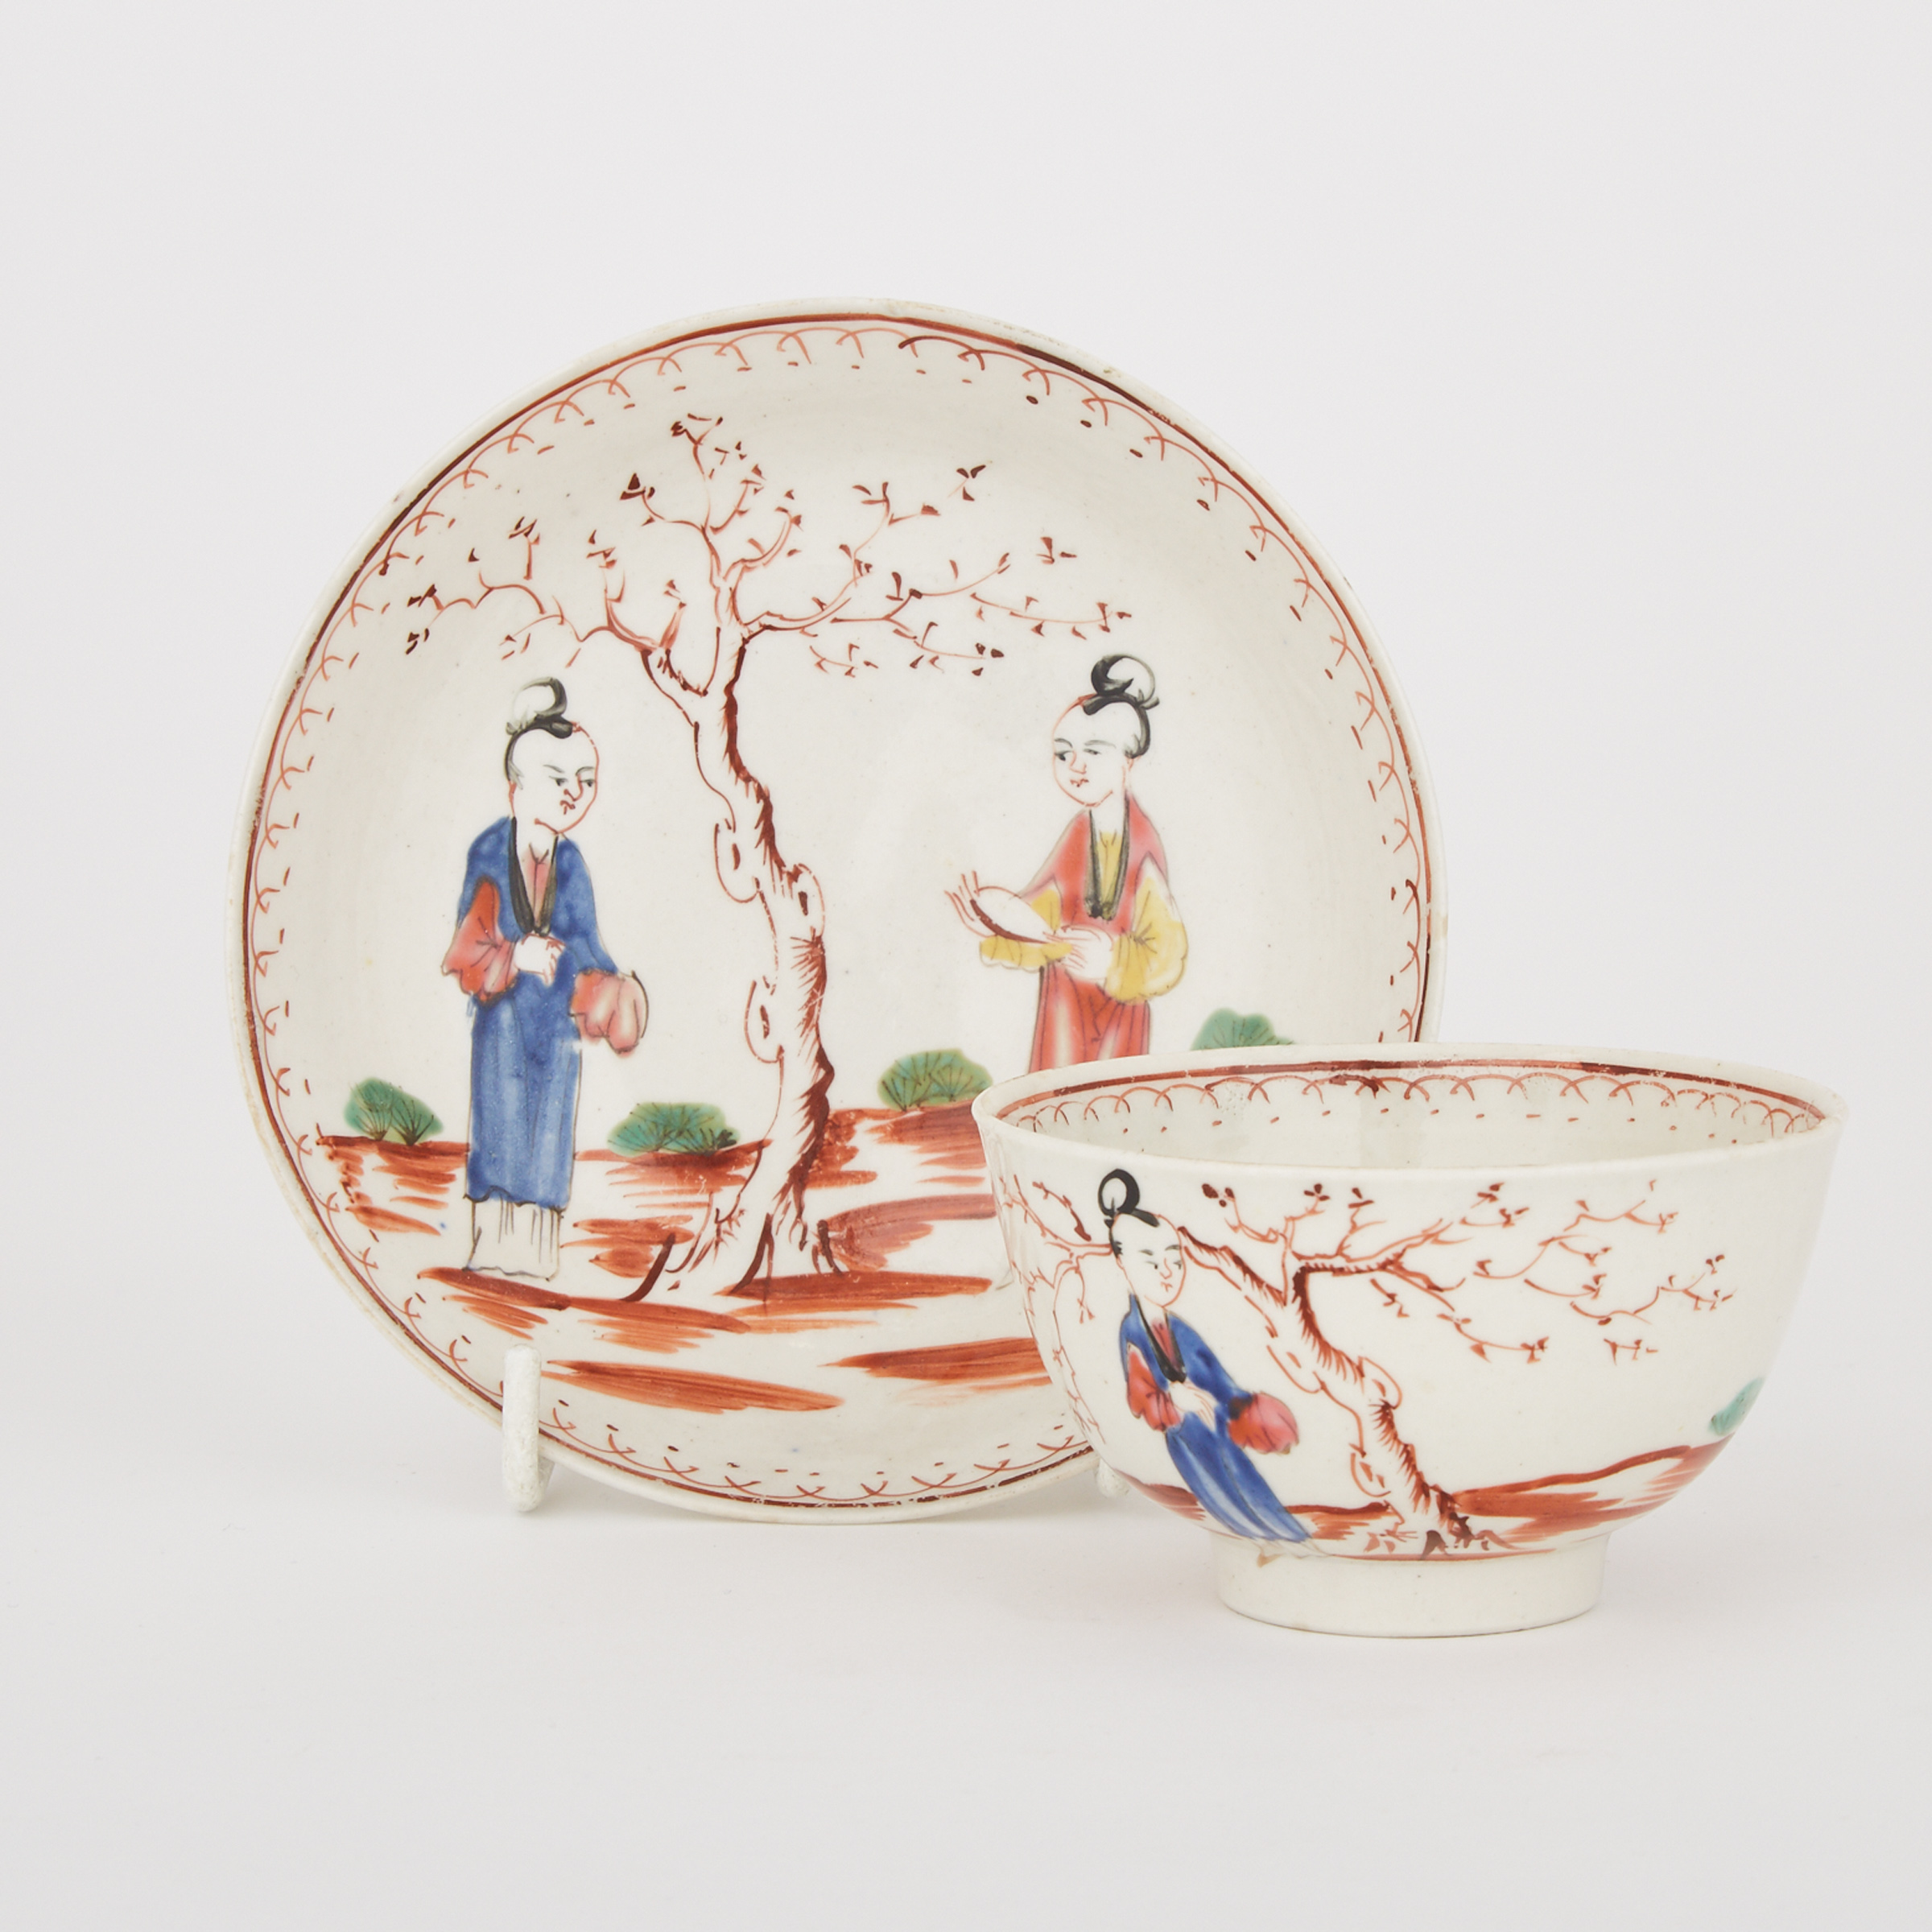 Pennington’s Liverpool Chinoiserie Tea Bowl and Saucer, c.1775-80